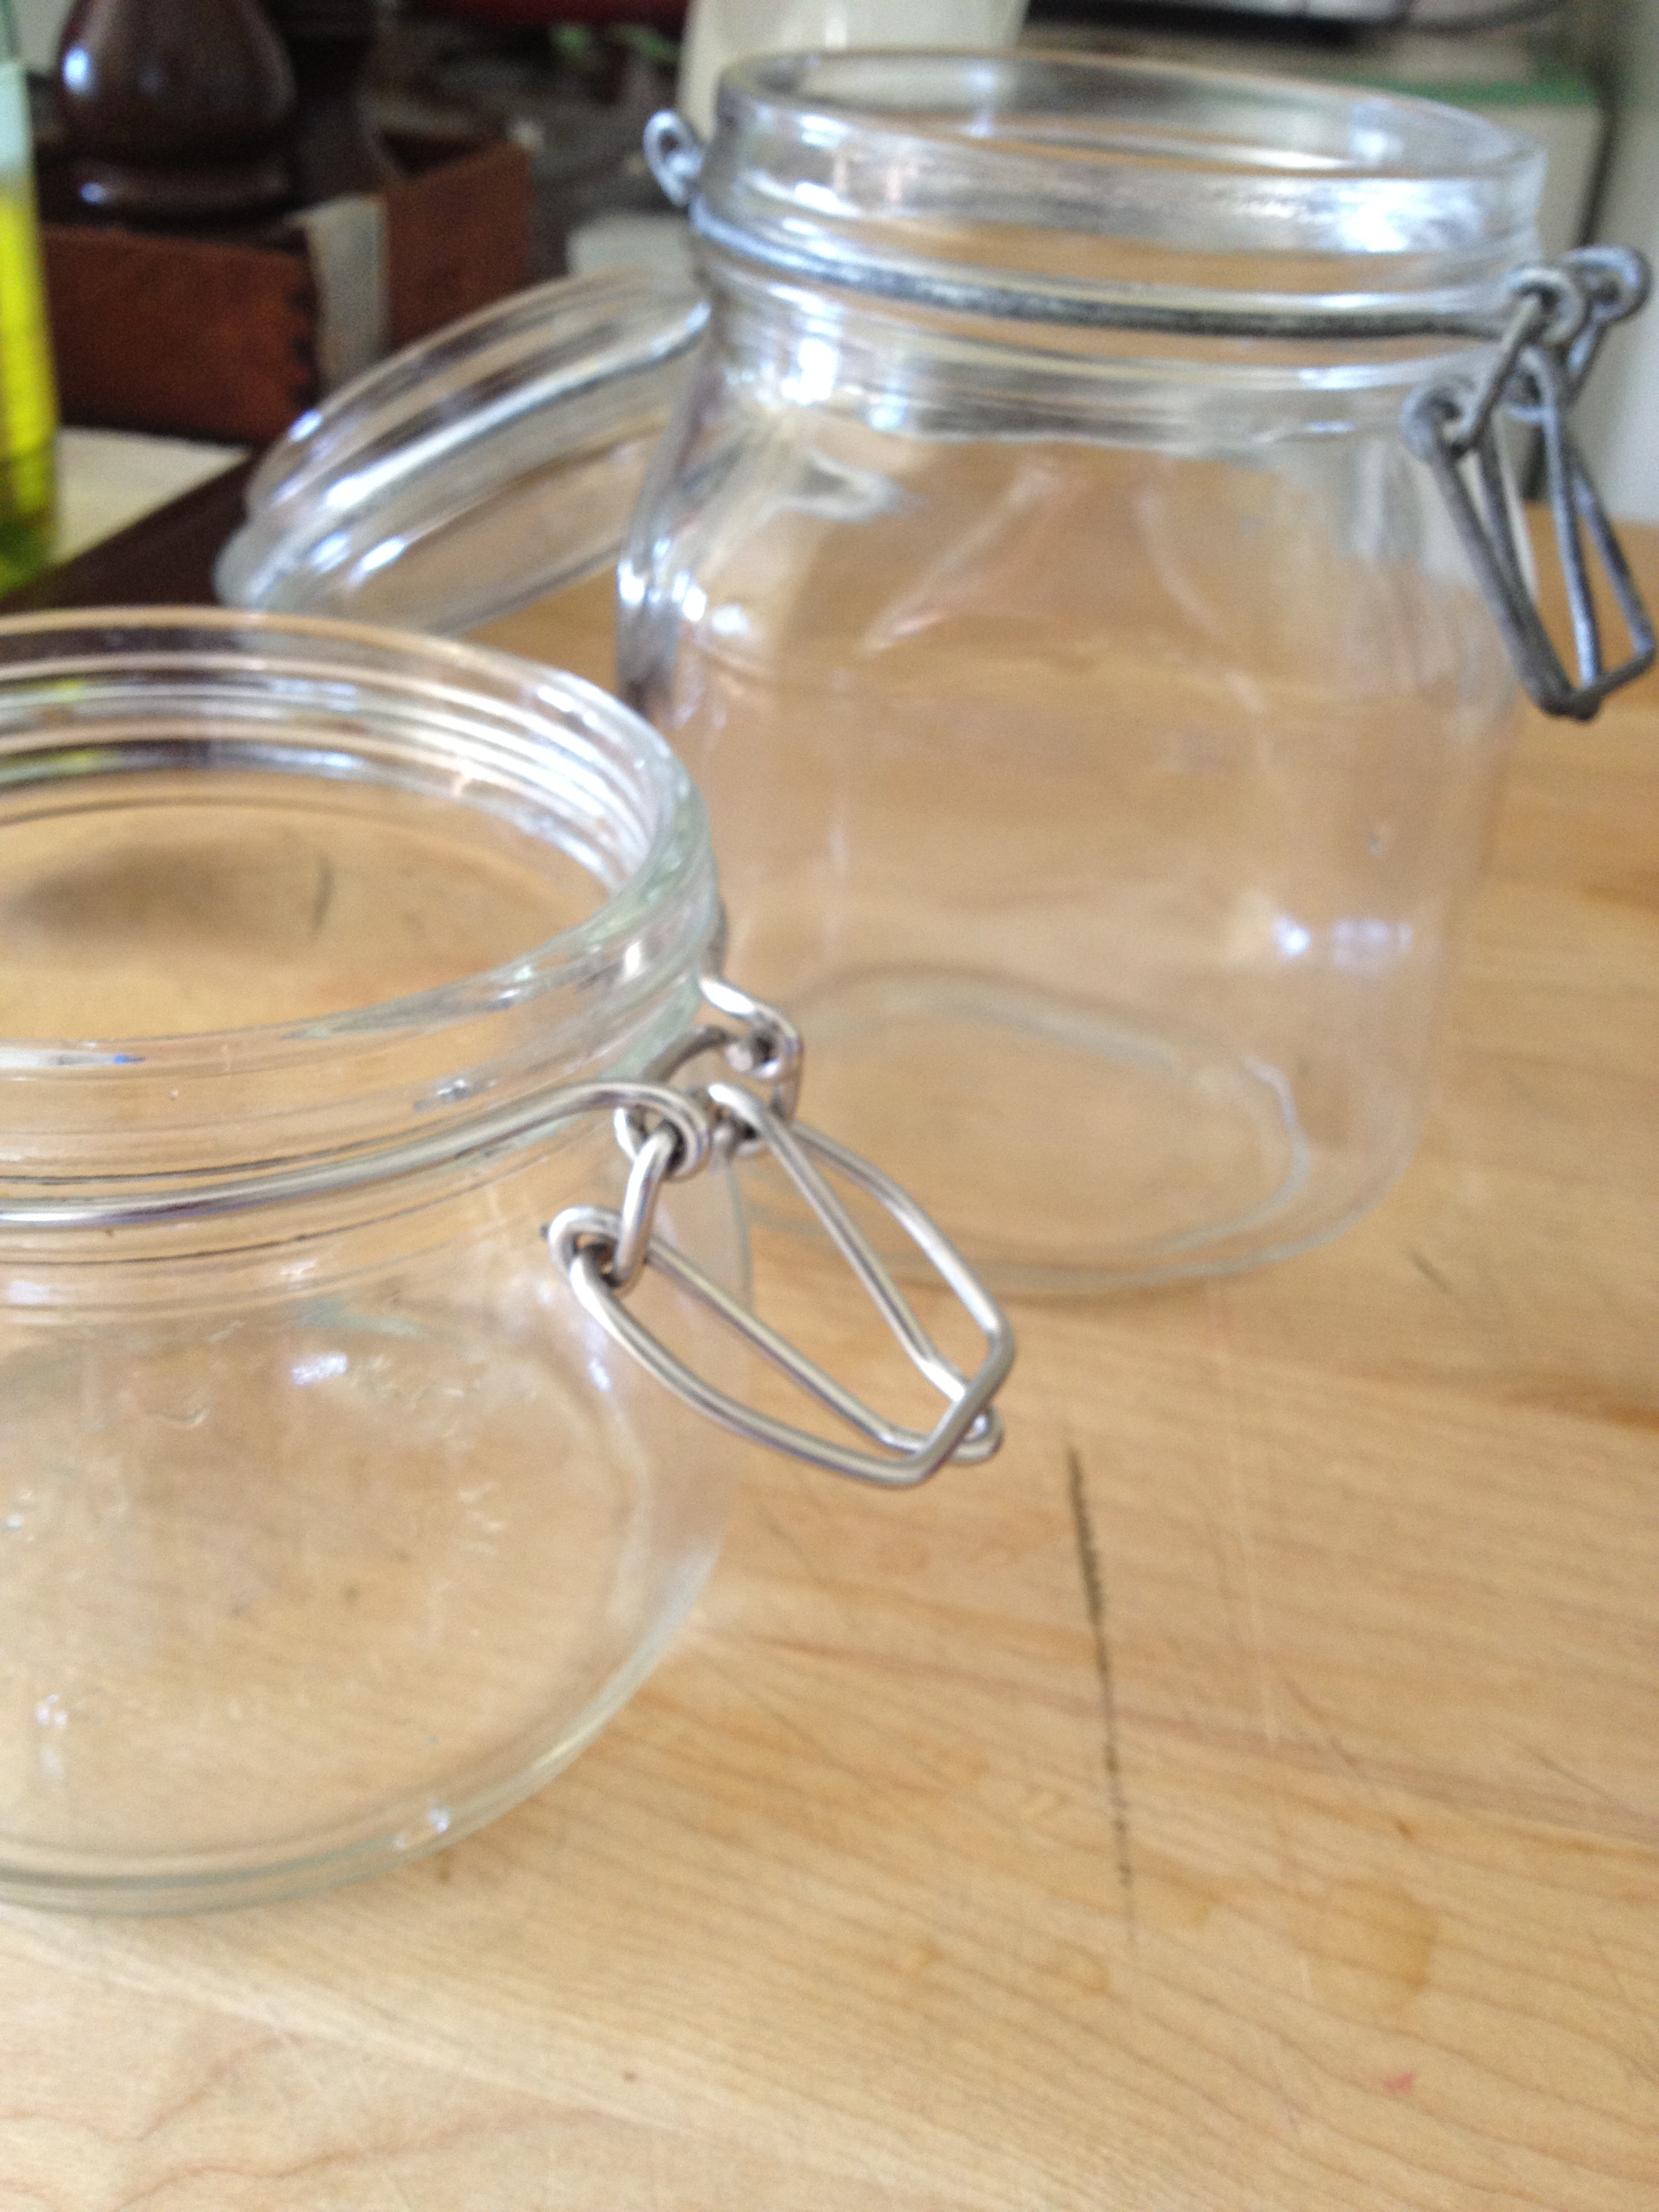 empty clean jars homemade sauerkraut | stems and all